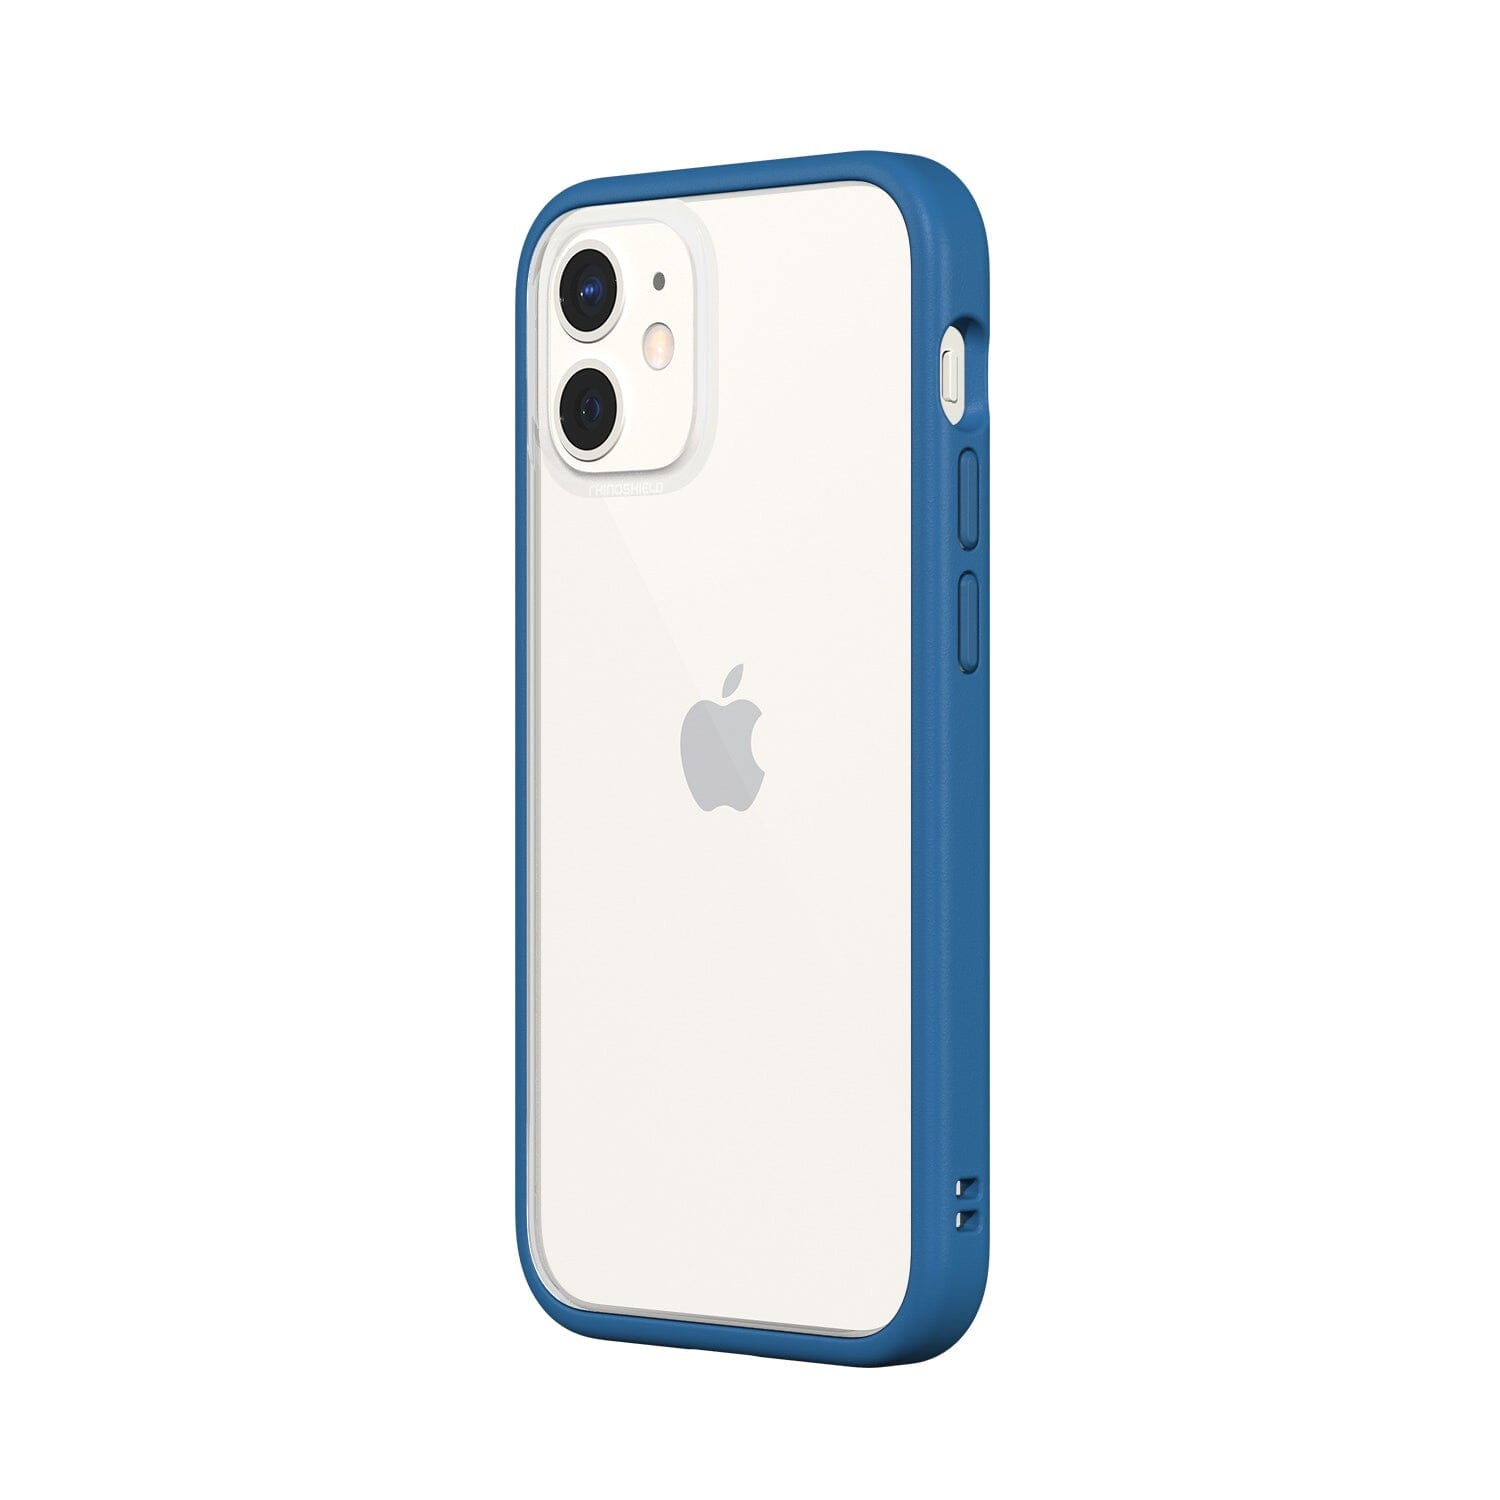 RhinoShield Mod NX Modular Case for iPhone 12 Series (2020) iPhone 12 Series RhinoShield iPhone 12 mini 5.4" Royal Blue 